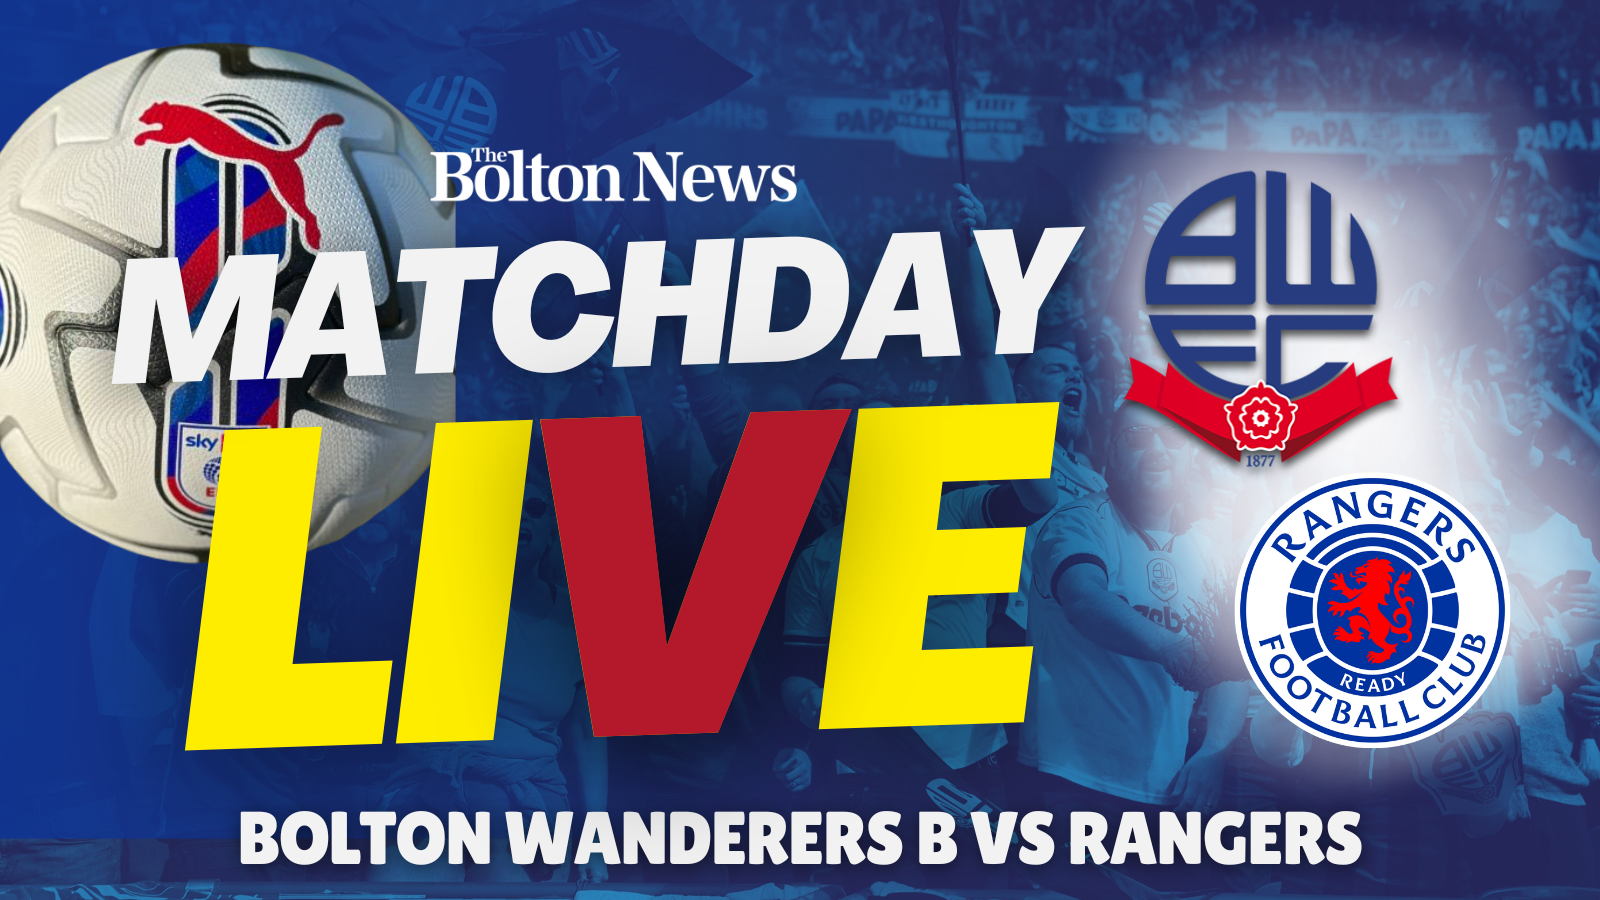 Bolton Wanderers B v Rangers - live matchday blog